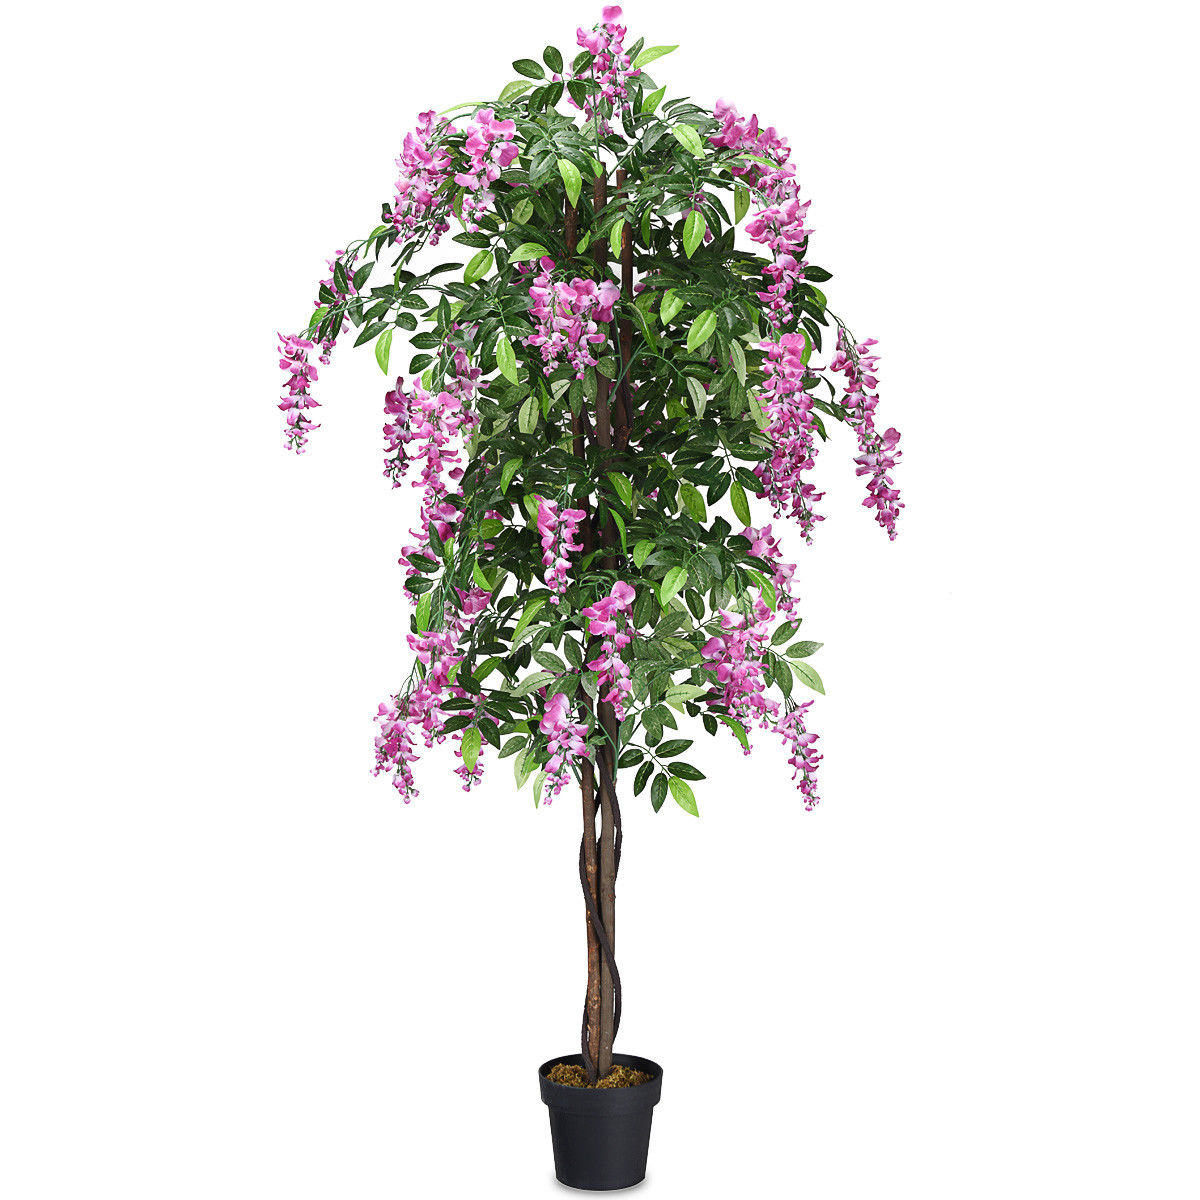 Artificial Wistera Silk Tree Pink Flower 6 Feet Home Holiday Decor